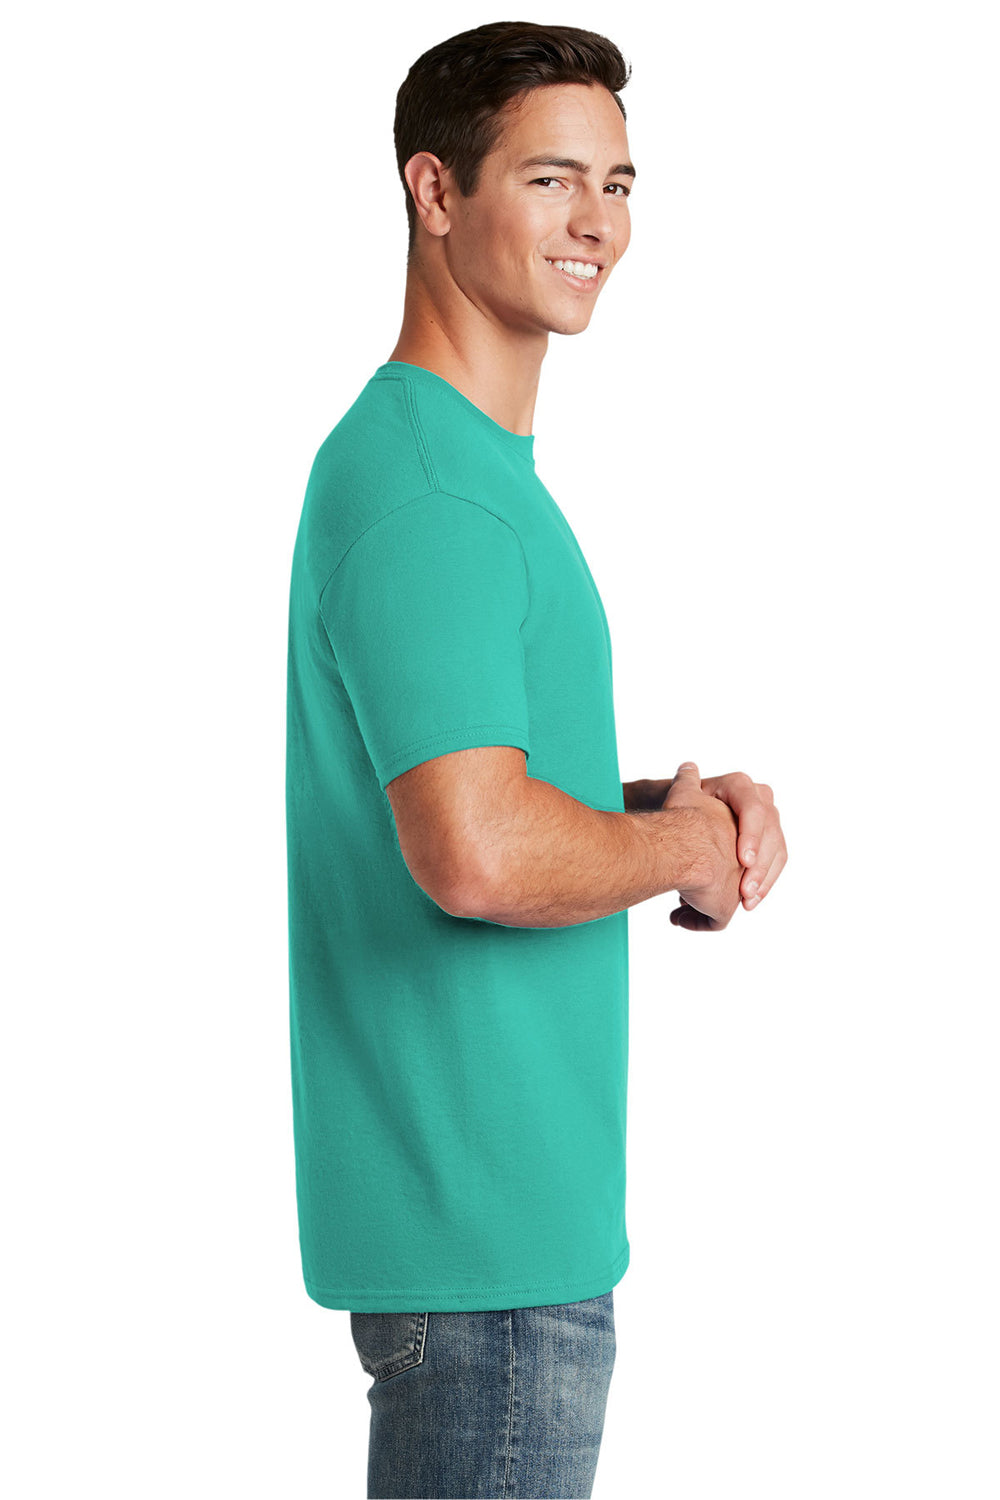 Jerzees 29M/29MR/29MT Mens Dri-Power Moisture Wicking Short Sleeve Crewneck T-Shirt Cool Mint Green Side